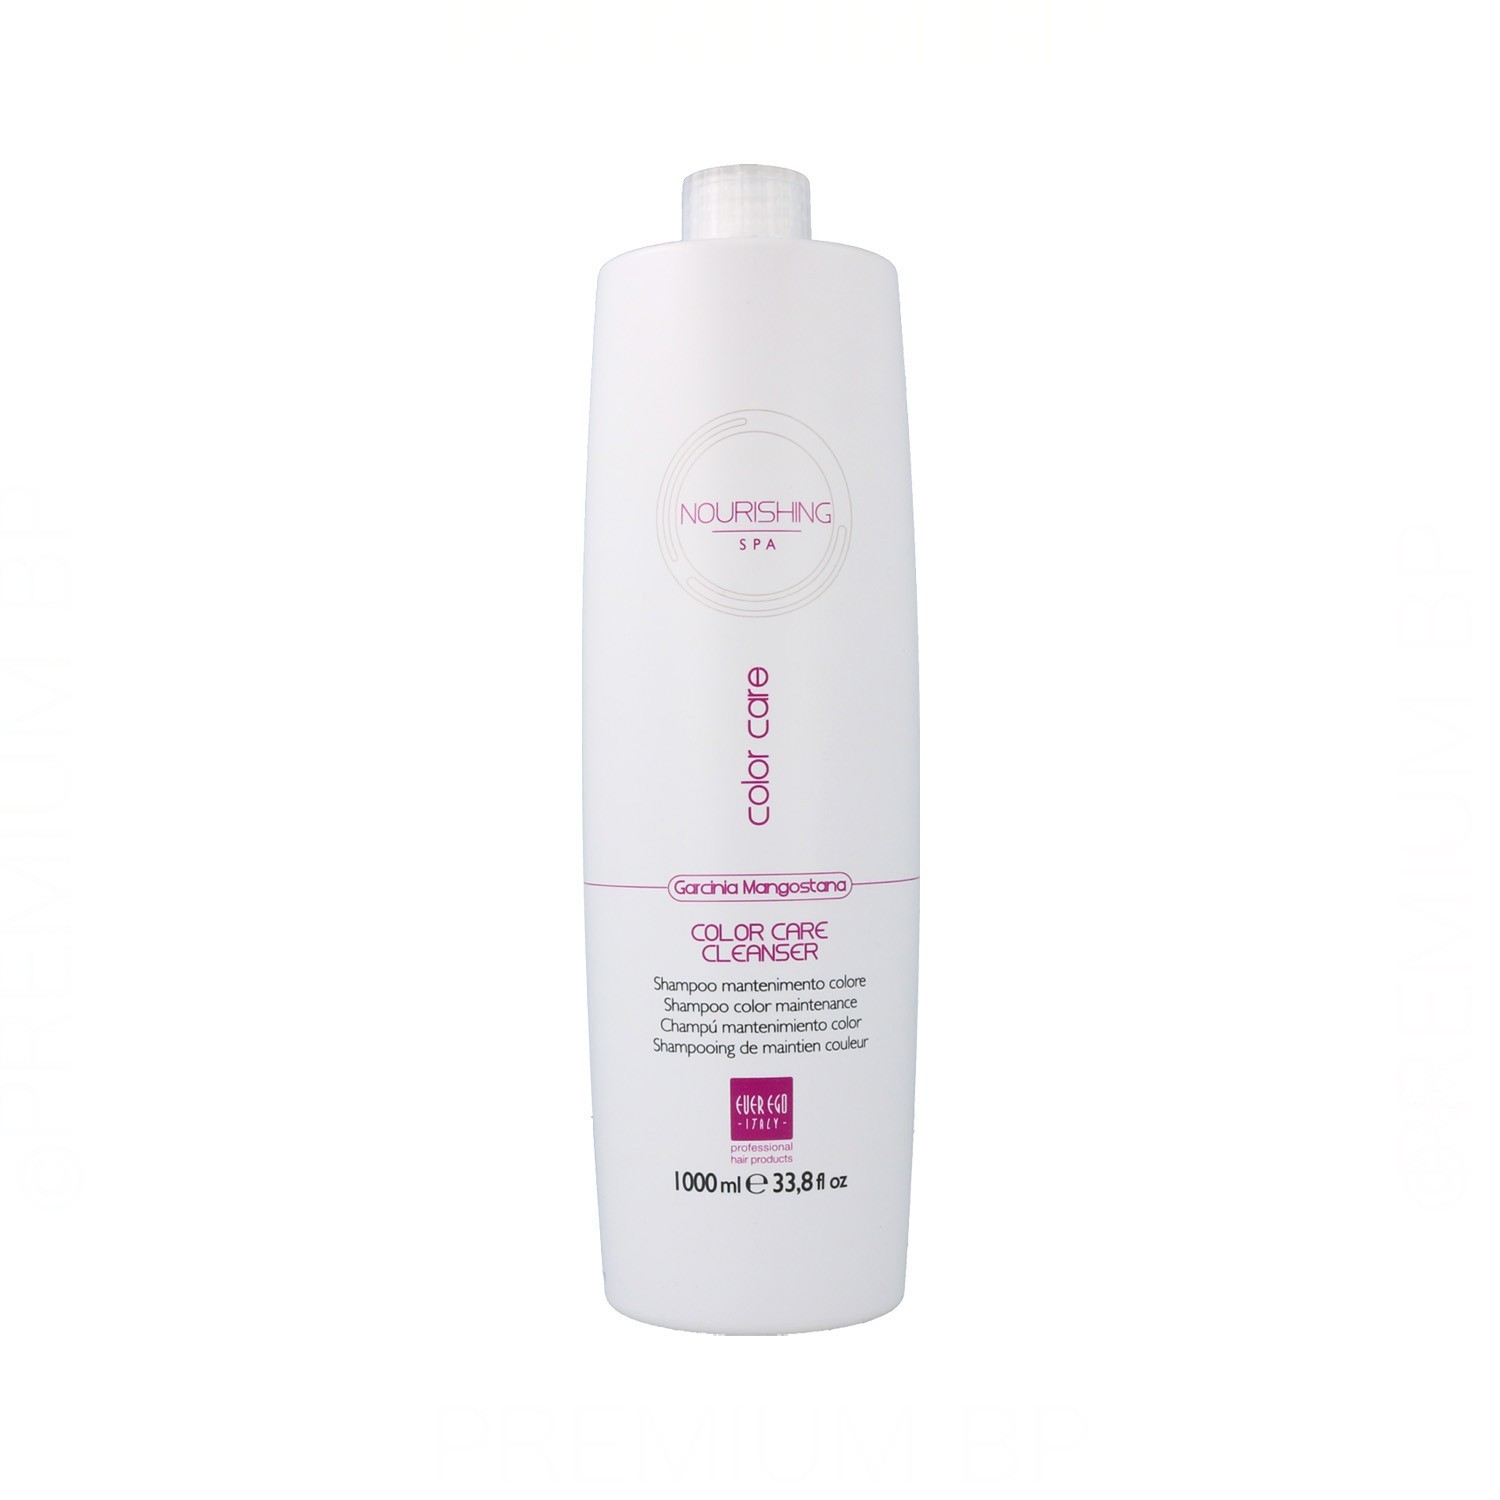 Everego Nourishing Spa Color Care Cleanser Xampú 1000 ml